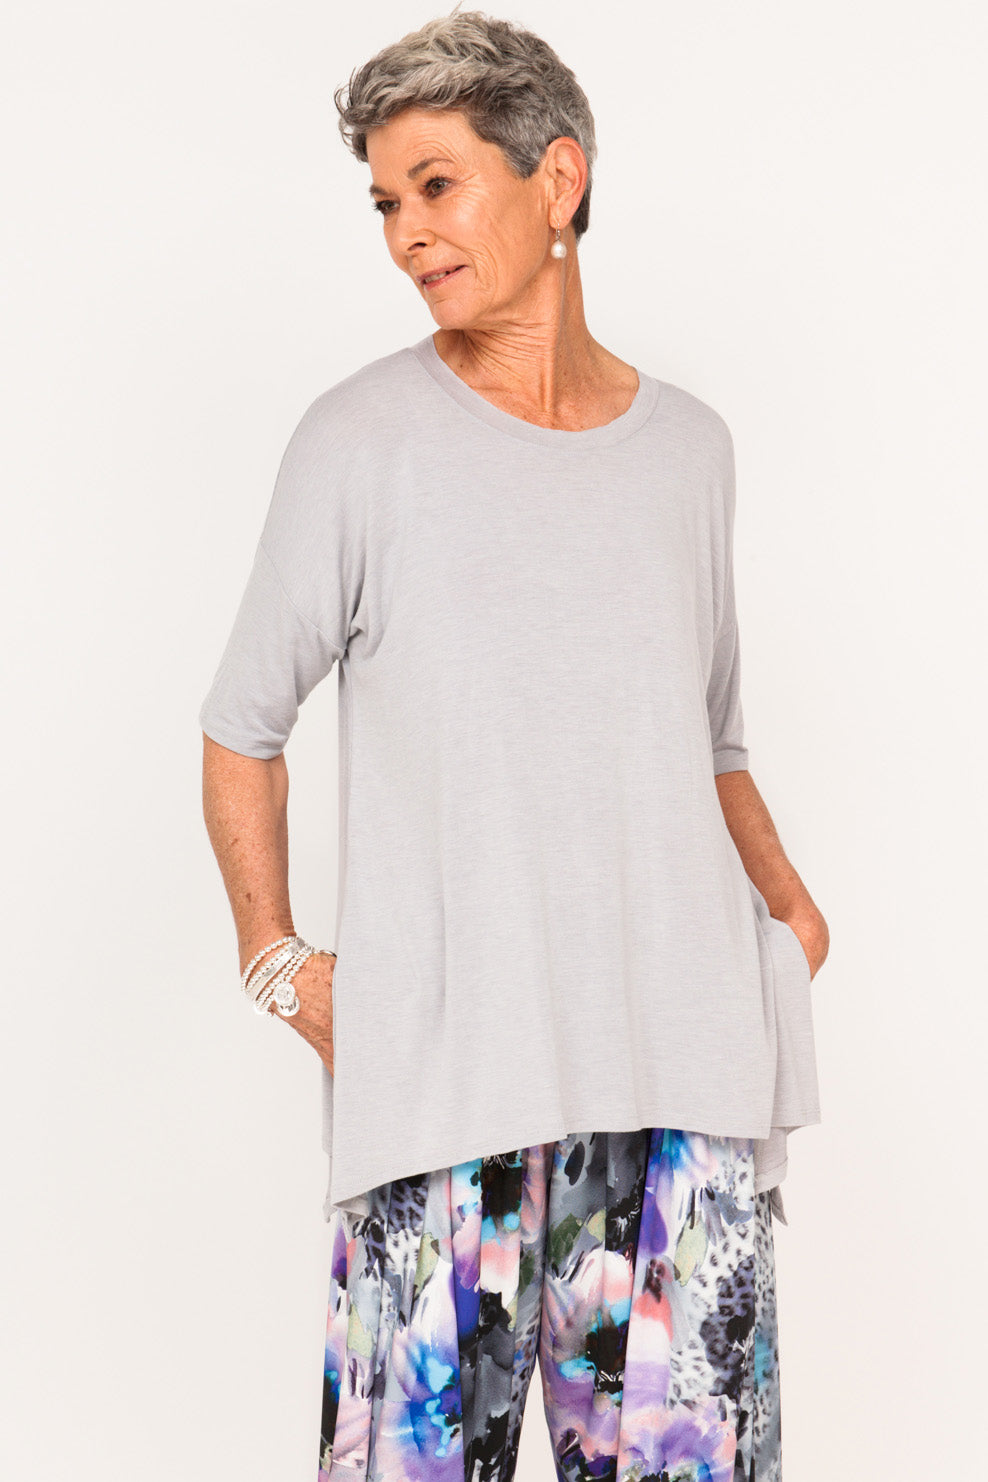 plus-size-womens-sportswear-online-australia-fashion-for-women-over-40